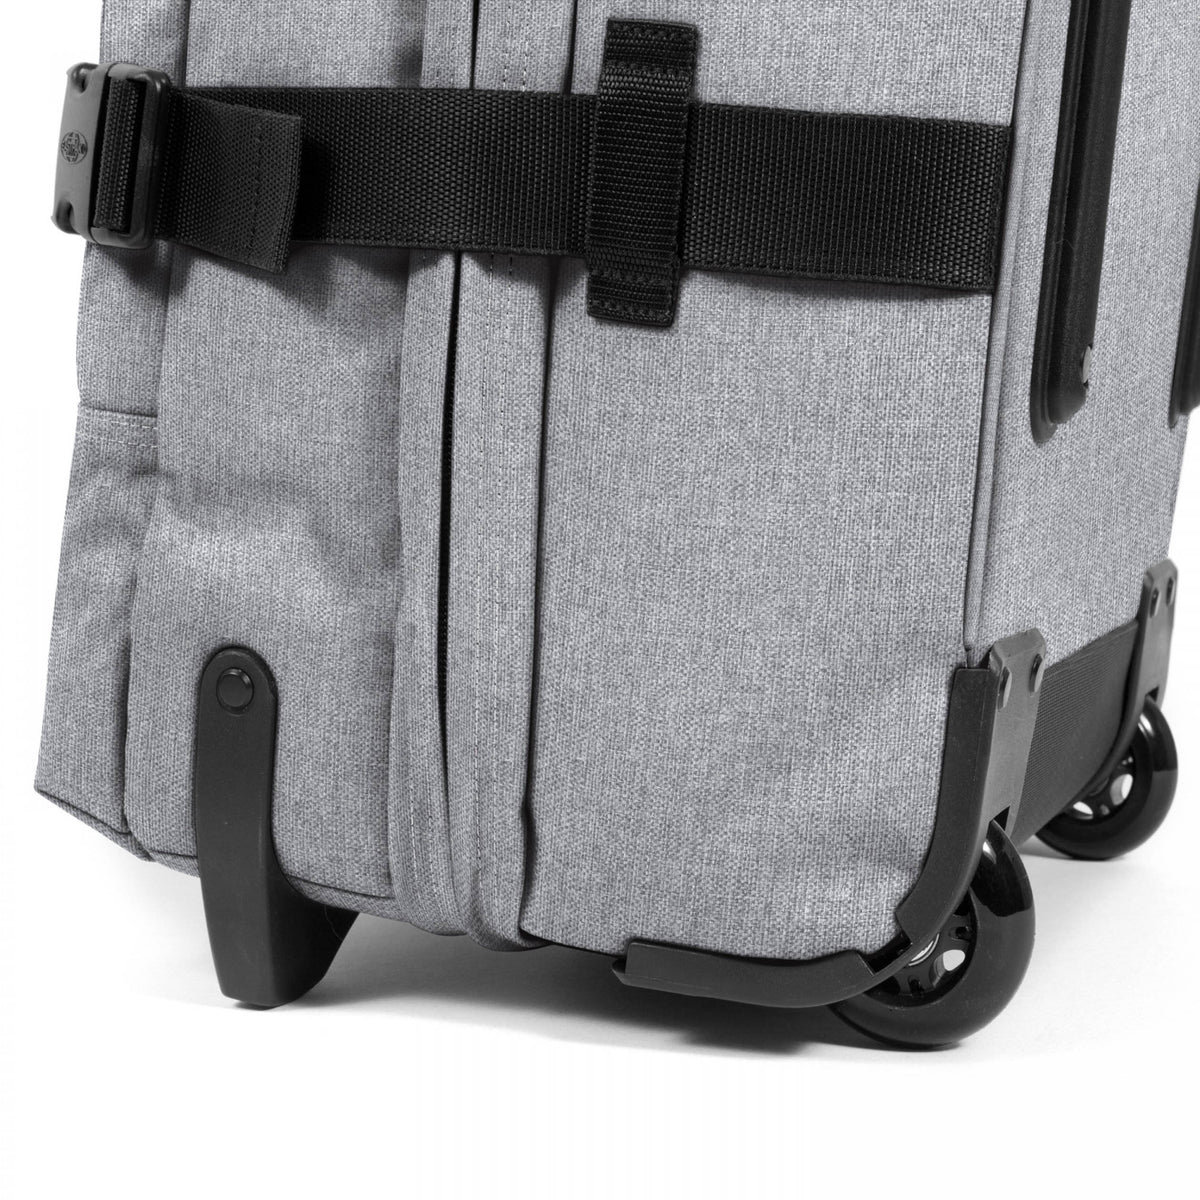 Eastpak Tranverz L Suitcase - Sunday Grey